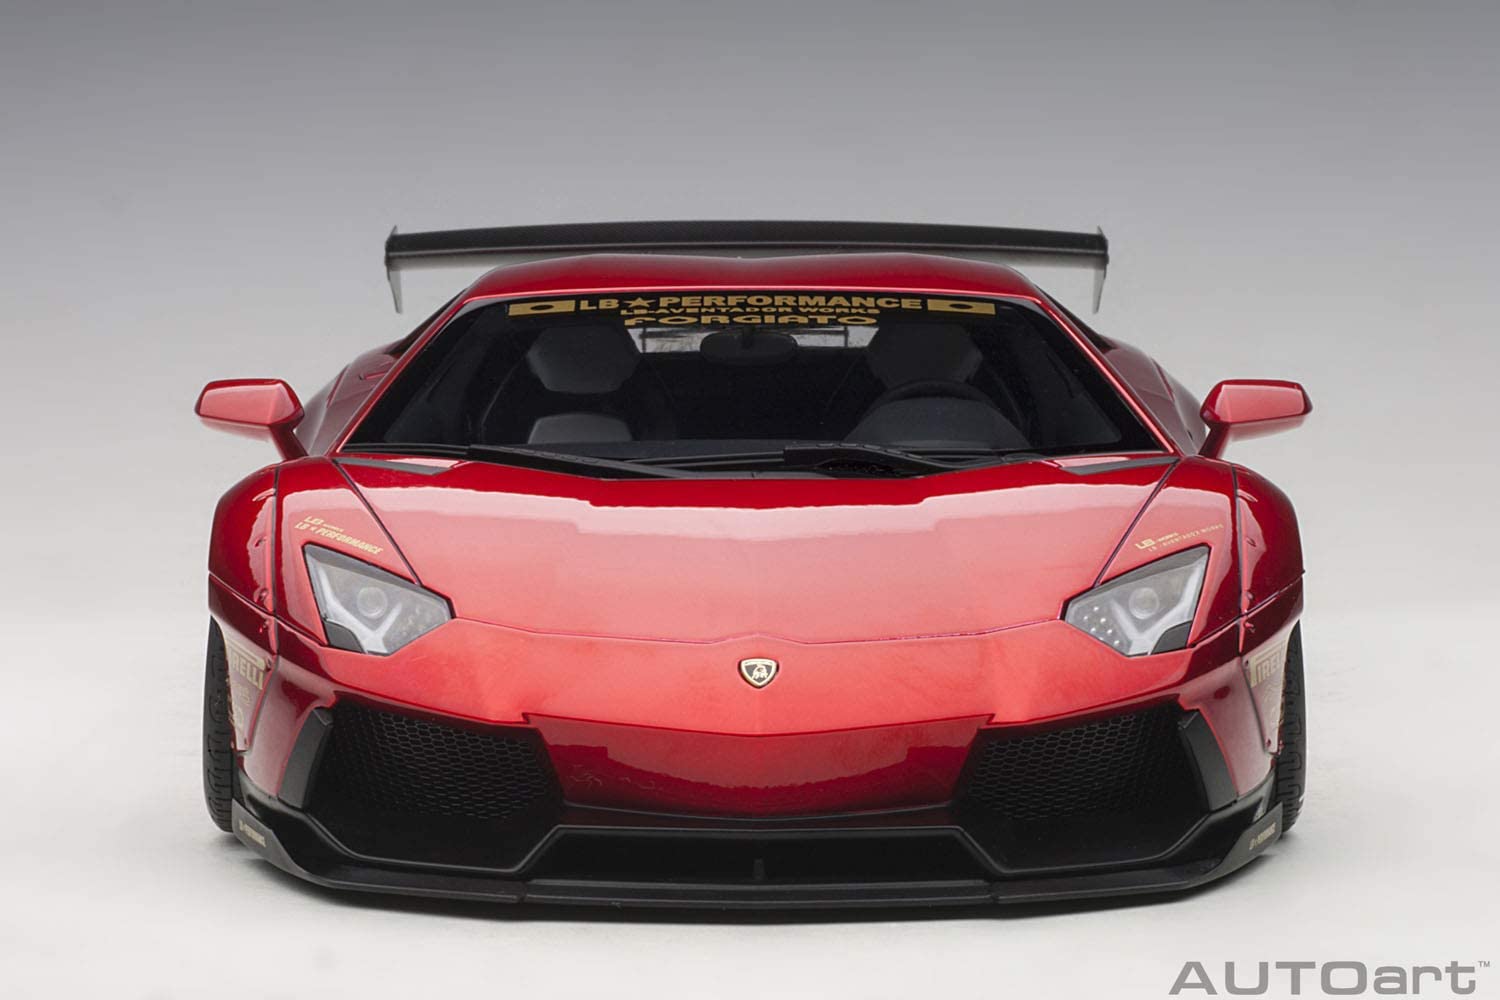 Finished product AUTOart 1/18 LB-WORKS Lamborghini Aventador  Metallic red 2371 画像4